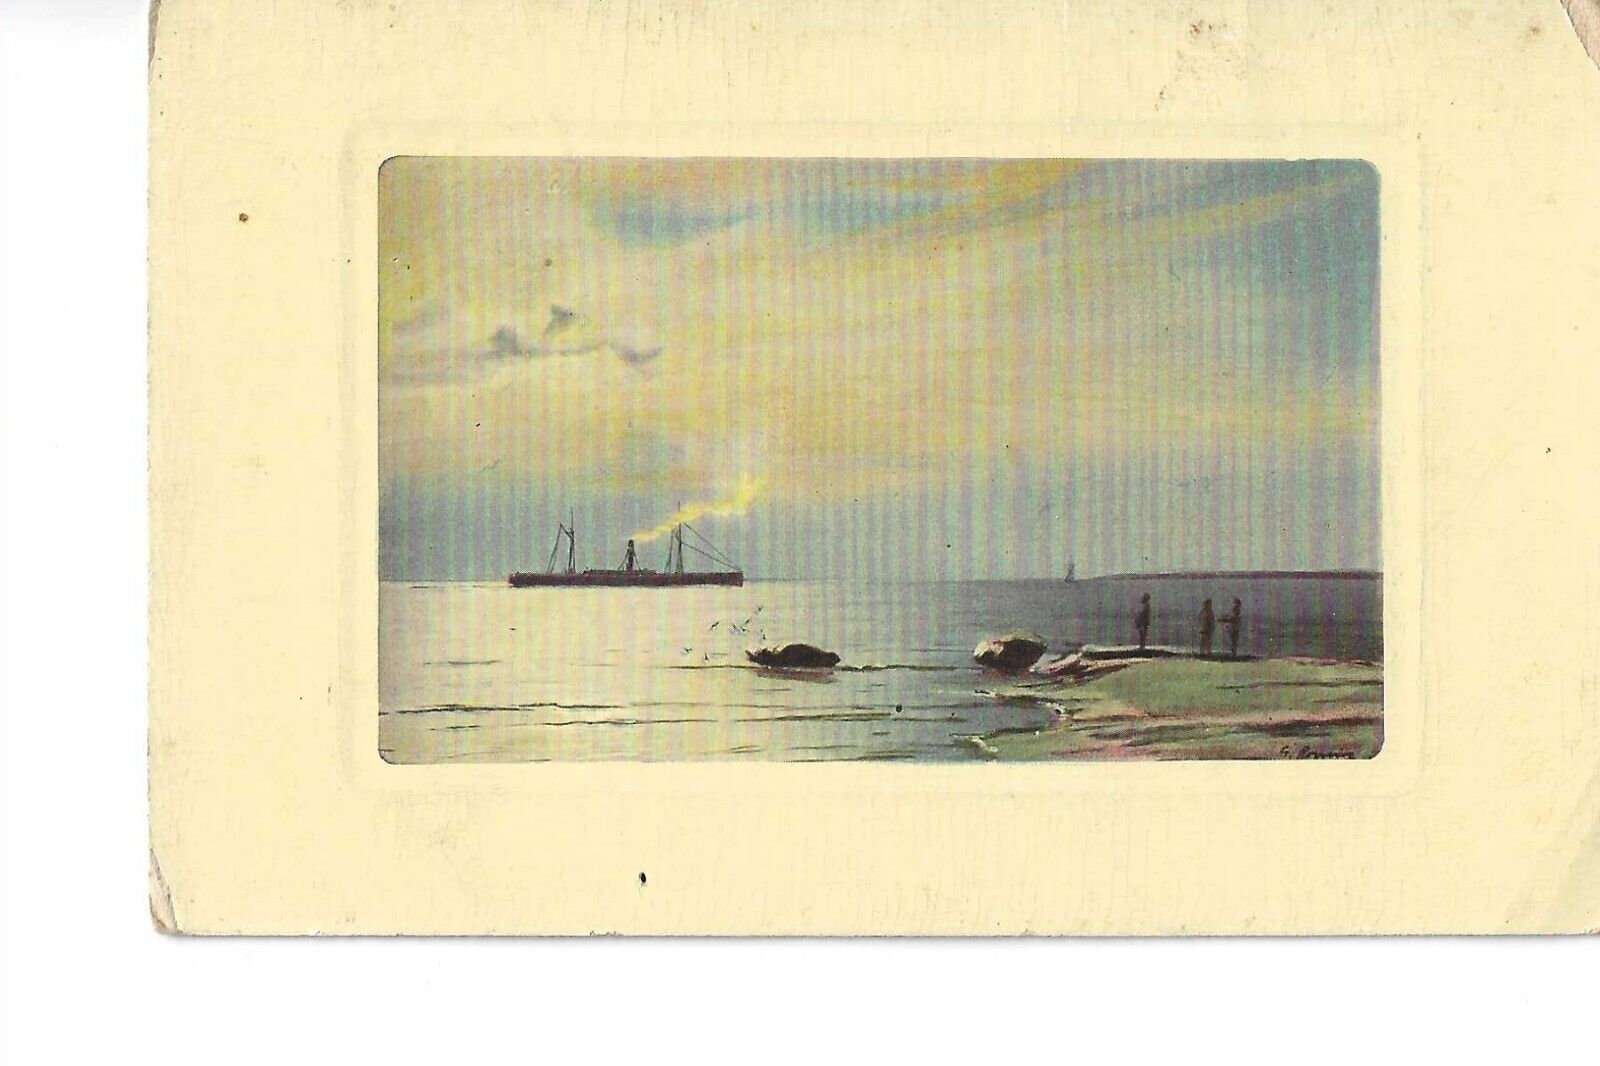  Vintage Used Postcard RPPC 1909 -Steamer / Ship at Sea Around Dawn or Dusk